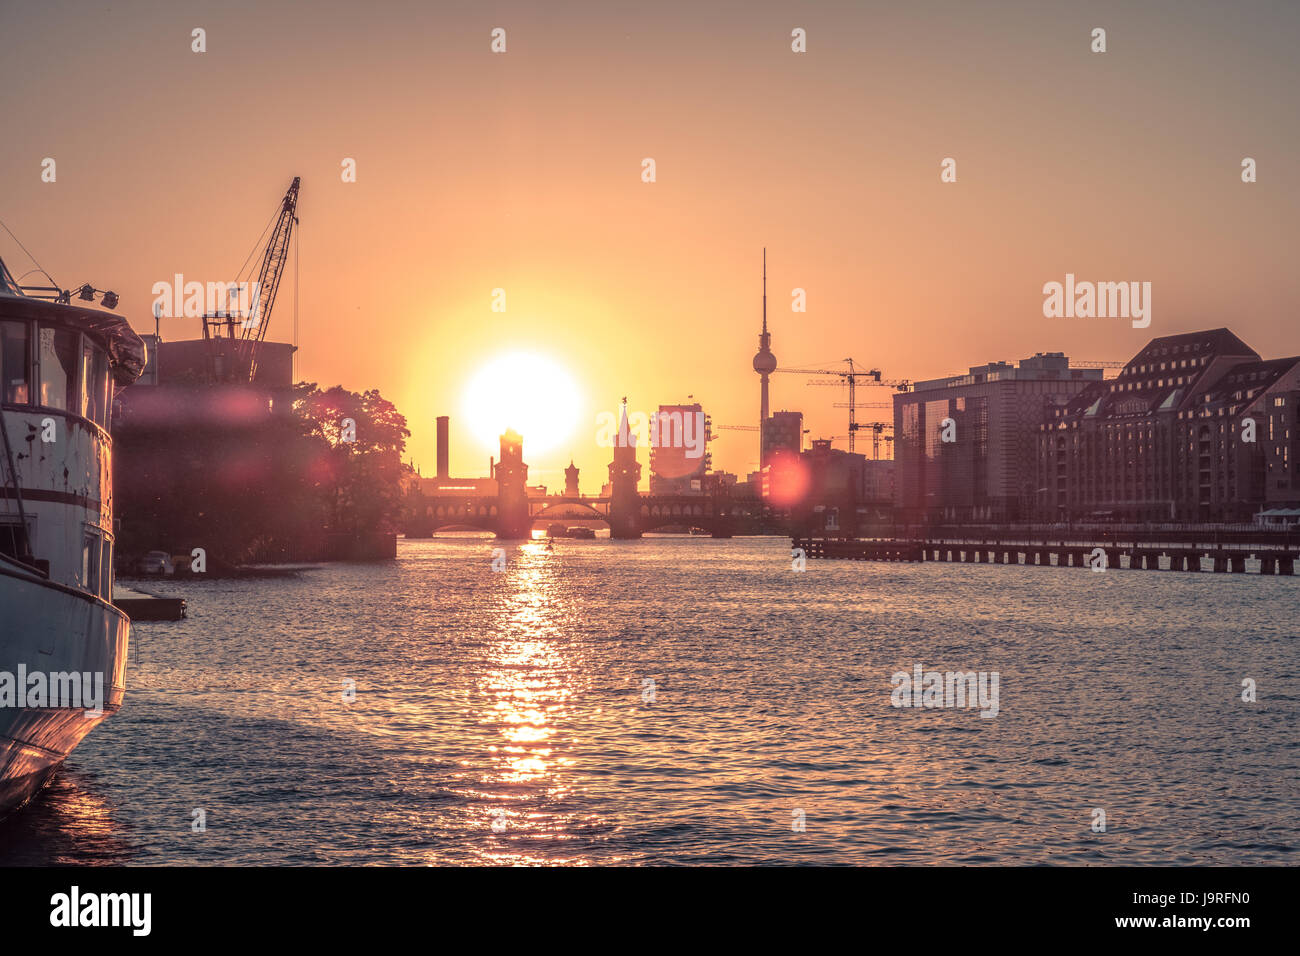 Fluss Spree, Oberbaumbrücke, Fernsehturm - Berlin Skyline der Stadt mit Sonnenuntergang Himmel Stockfoto